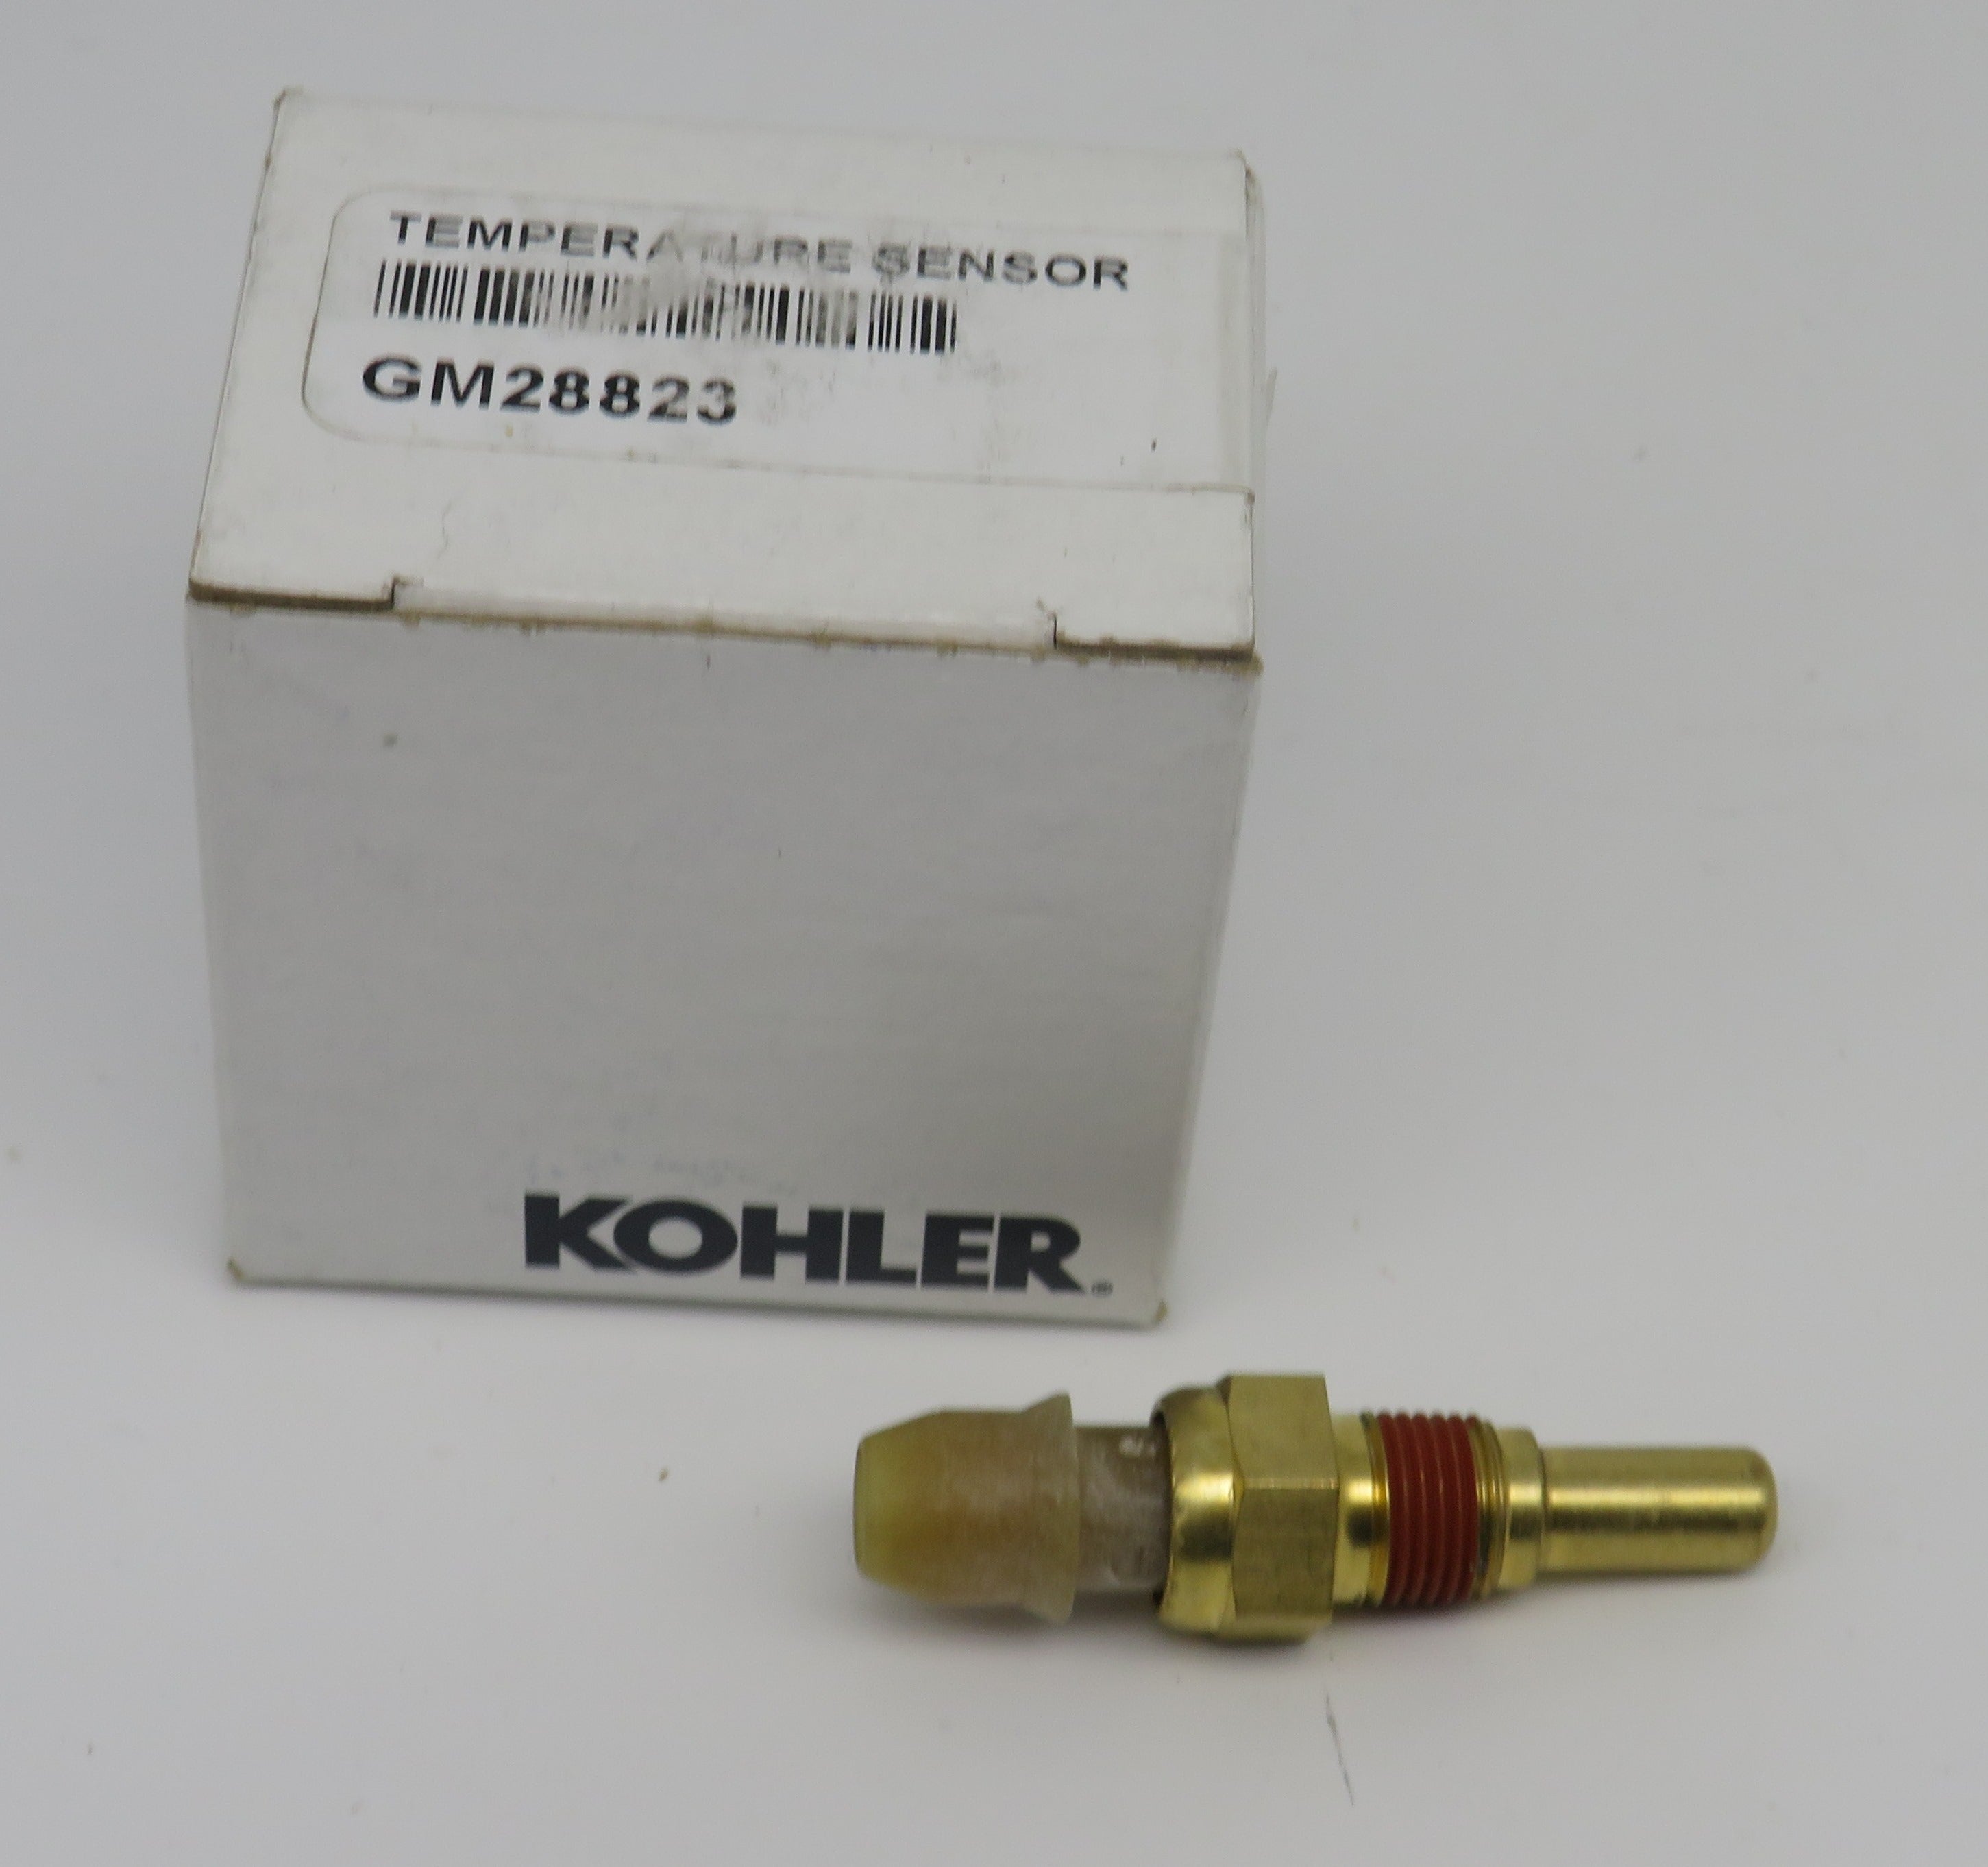 GM28823 Kohler Temperature Sensor